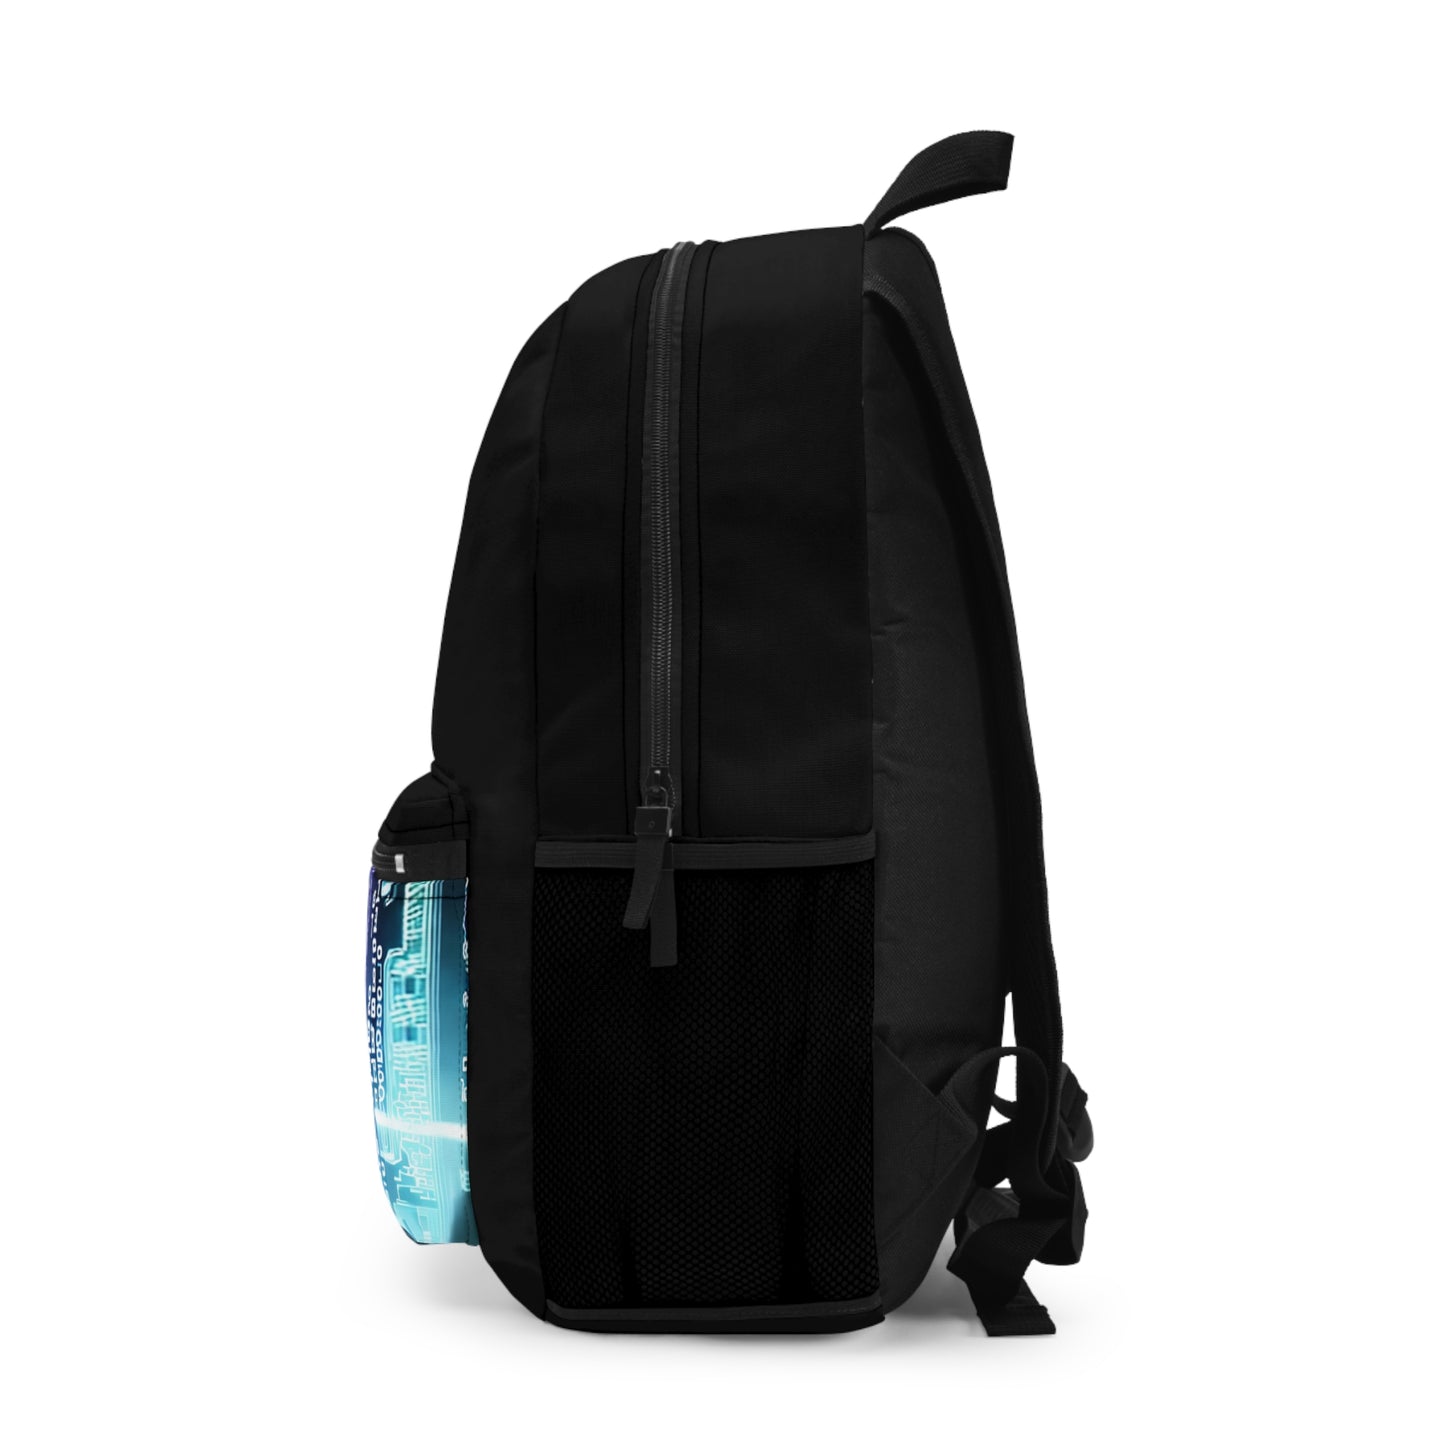 Cybernet Hacker Classic Black Backpack